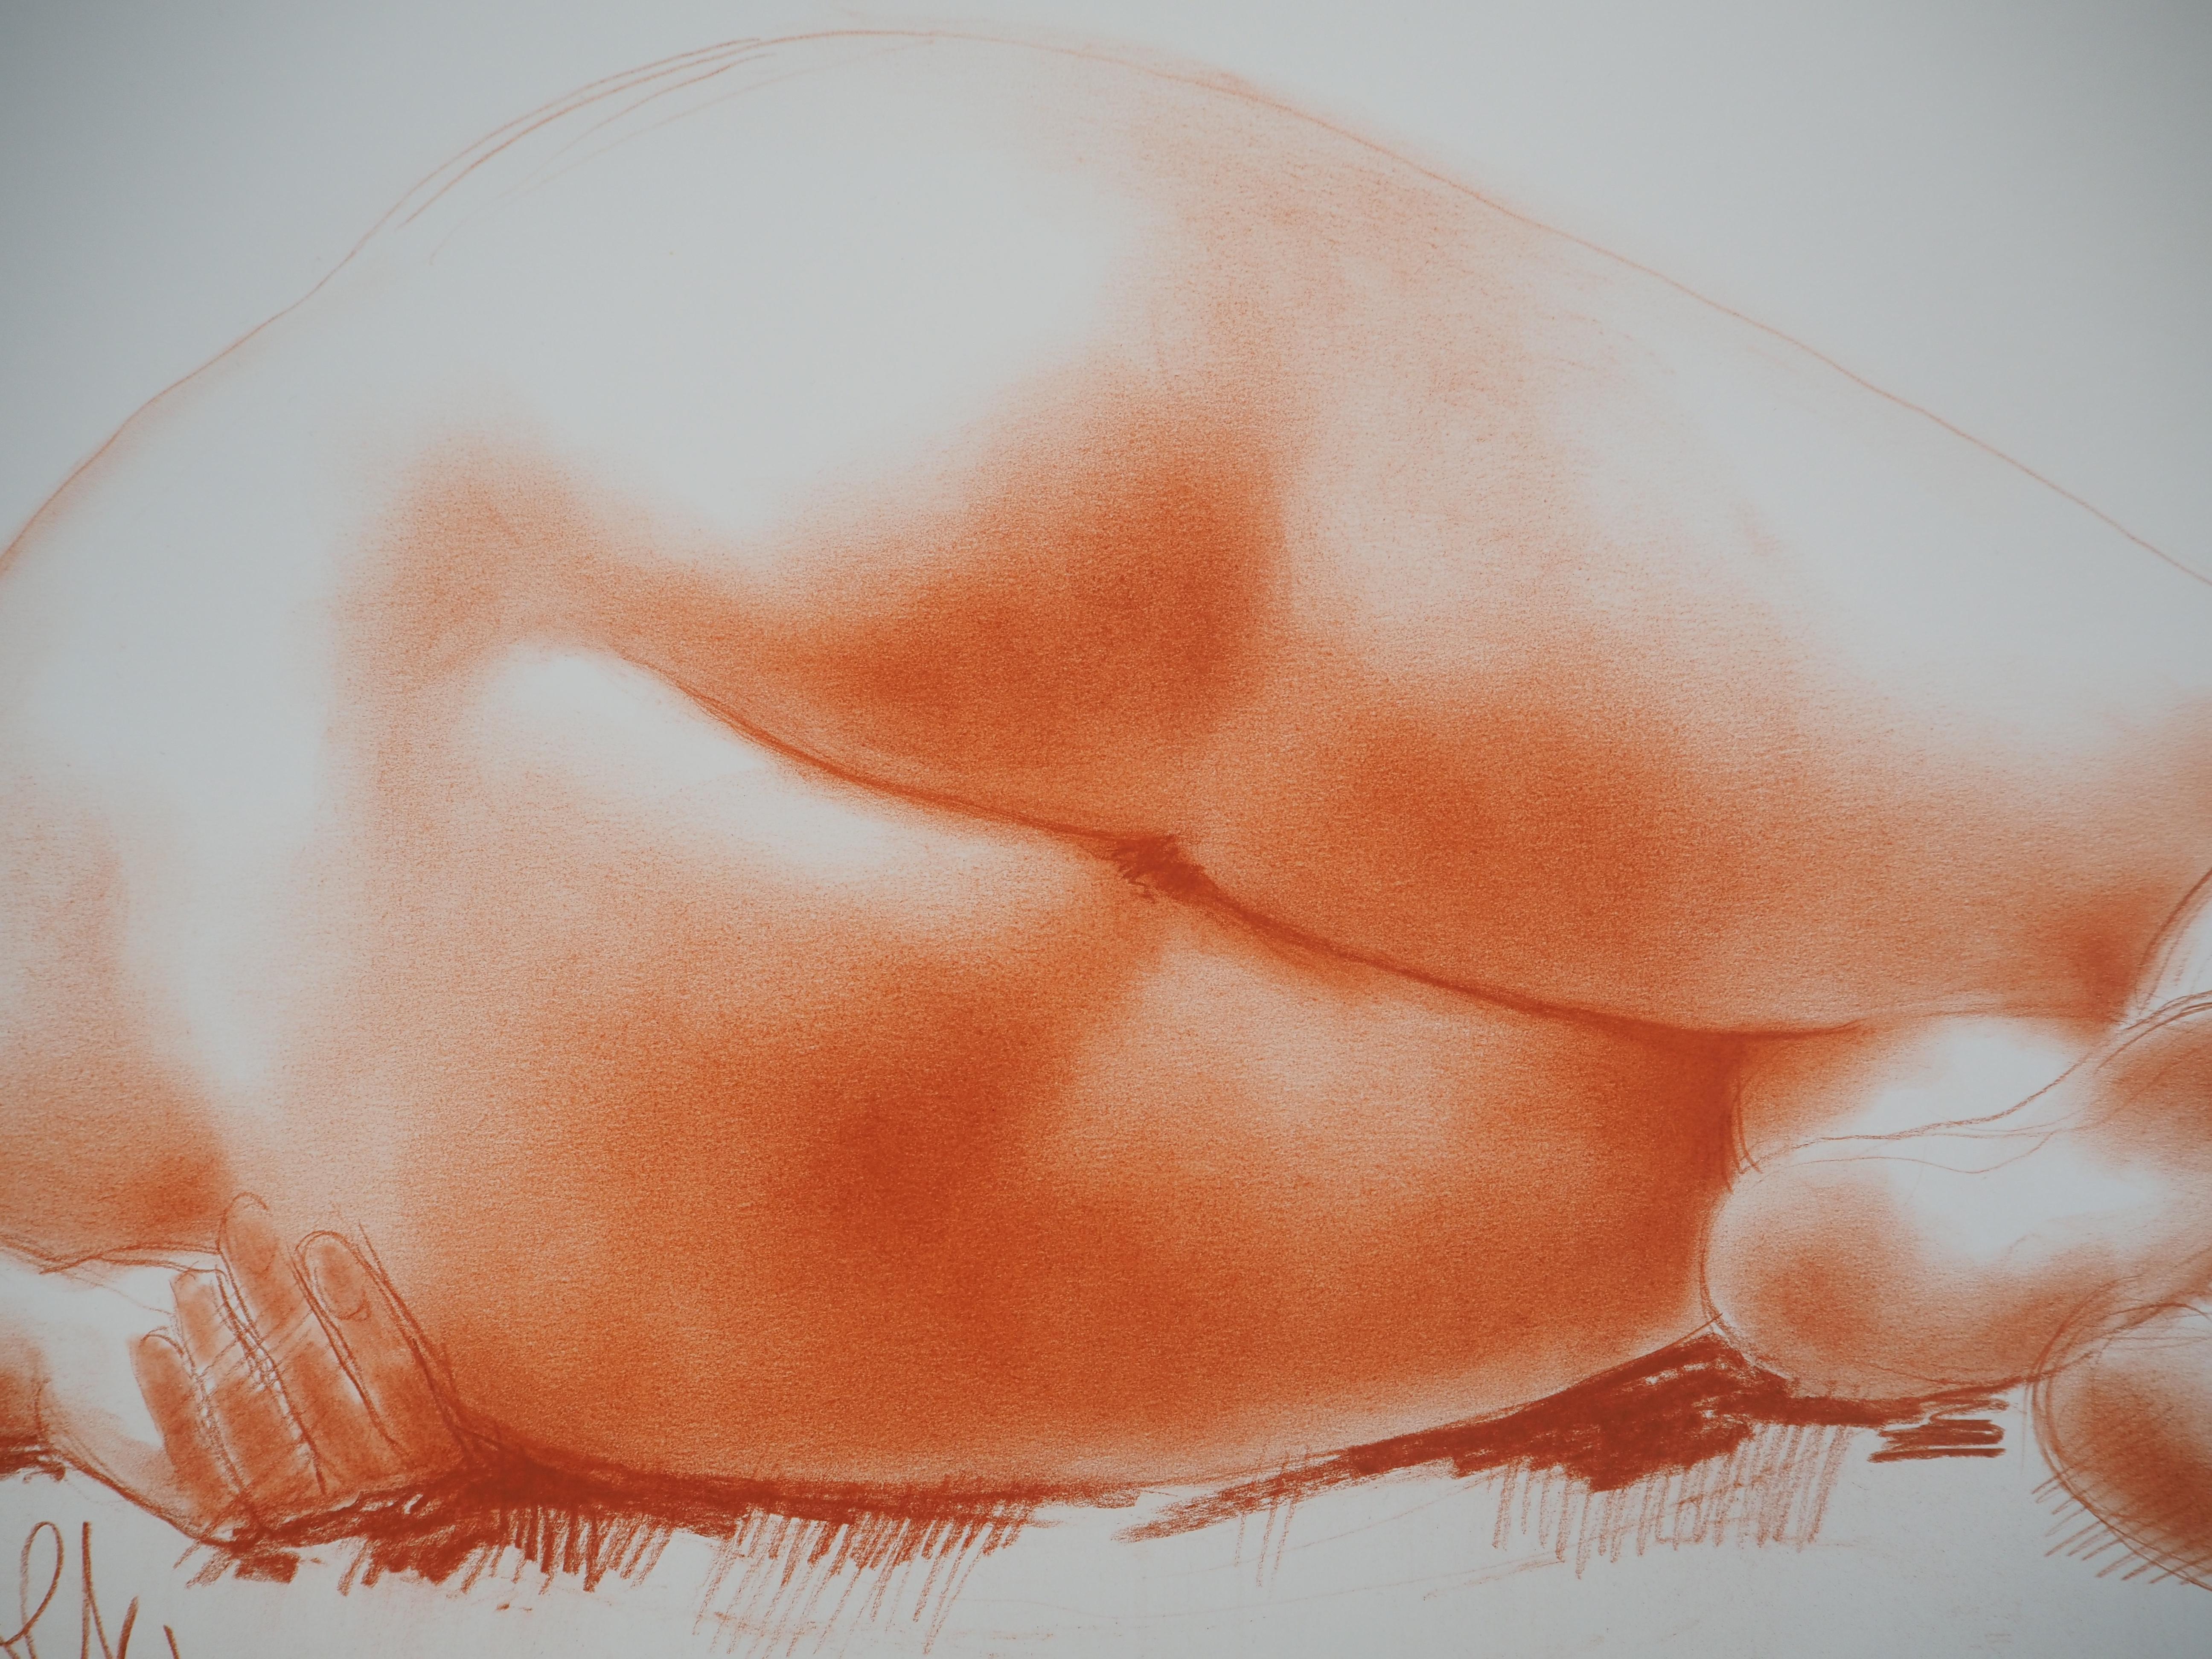 Reclining Nude - Original handsigned drawing in sanguine 4